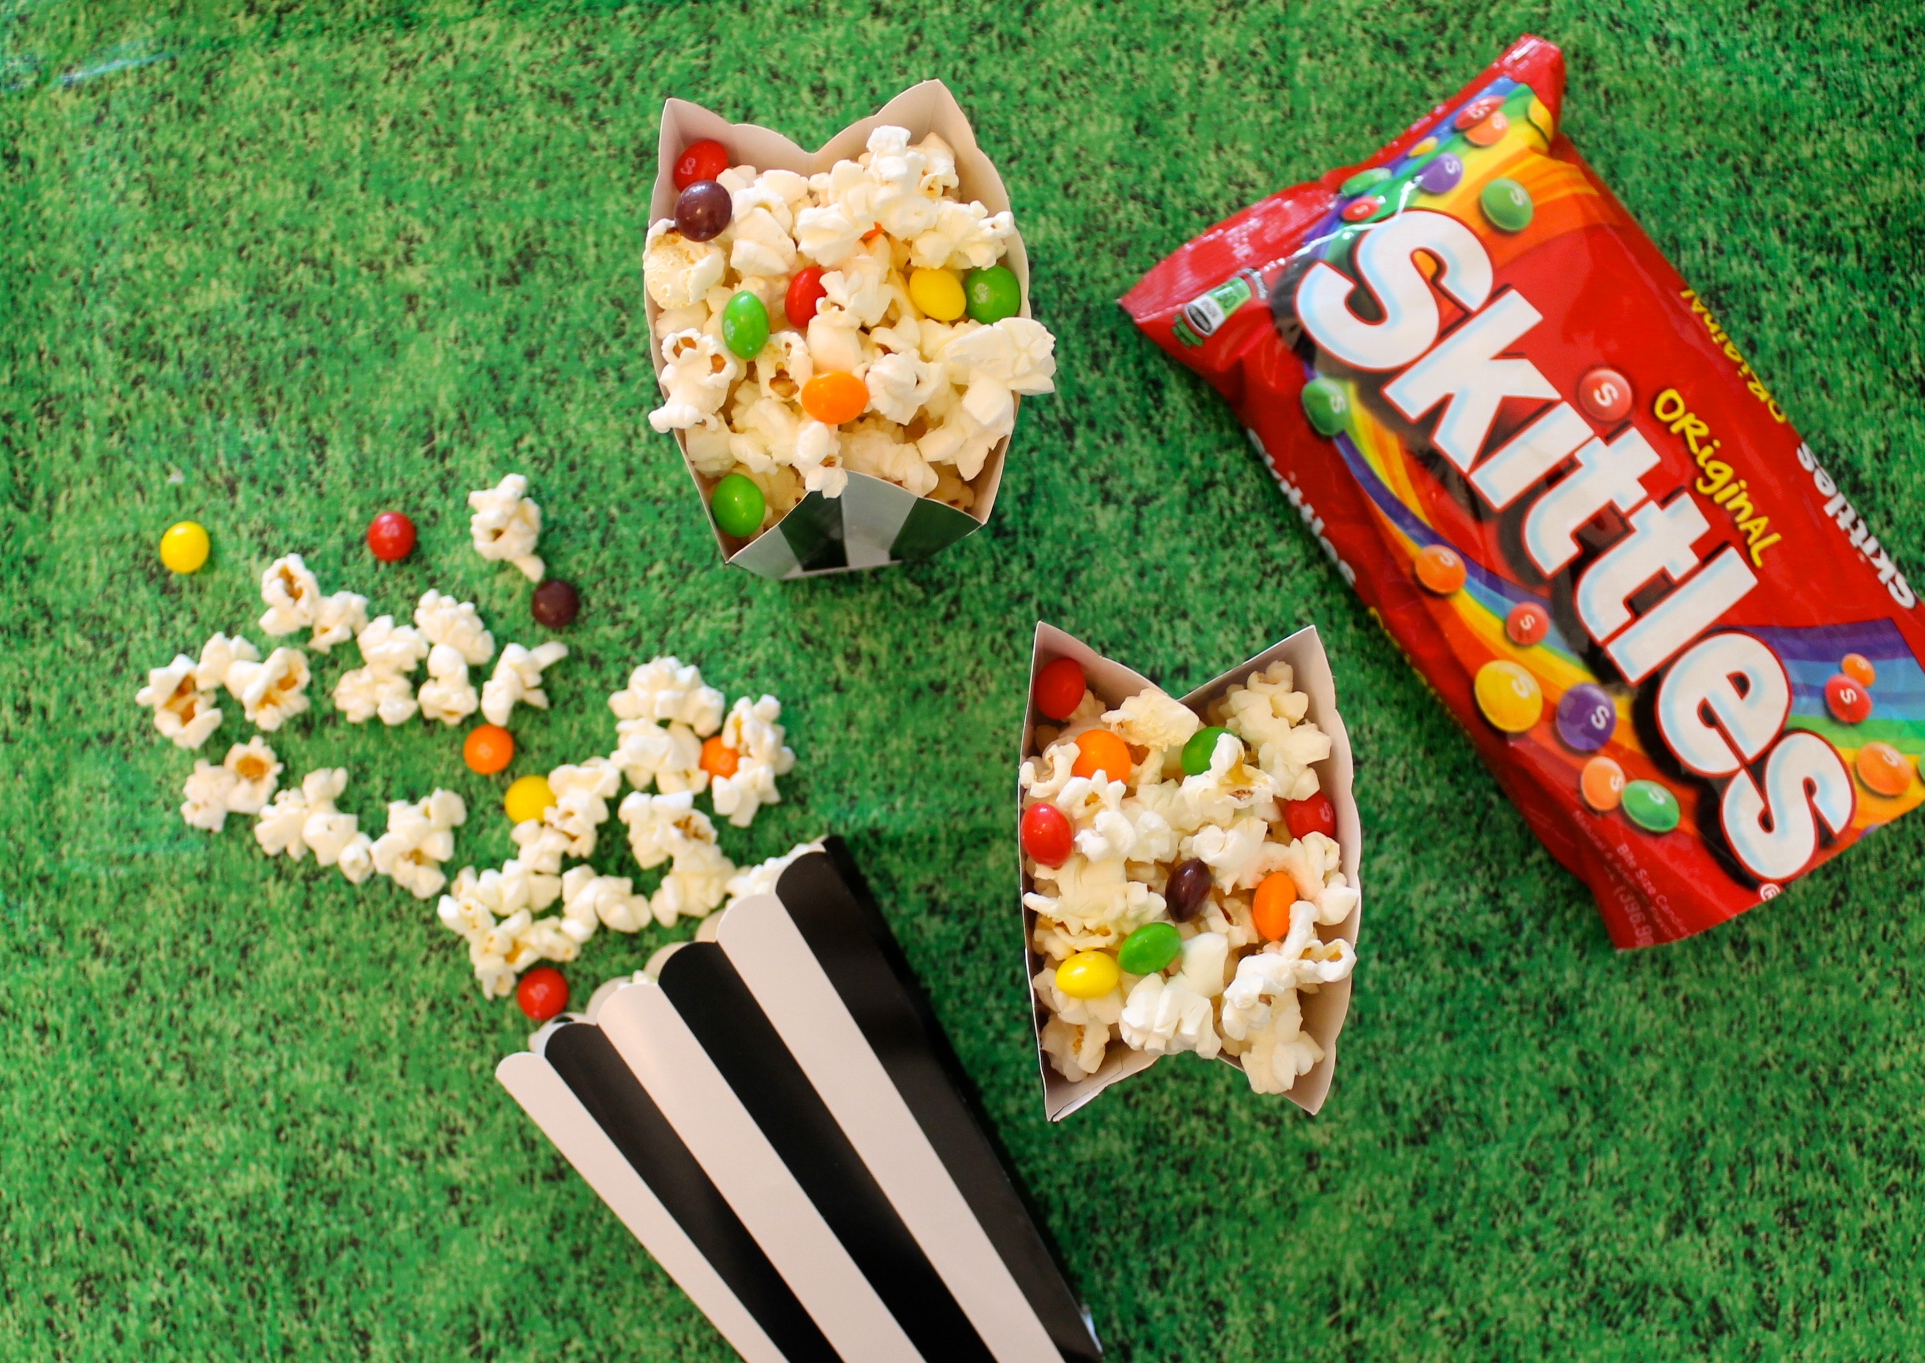 Skittles popcorn, delicious!